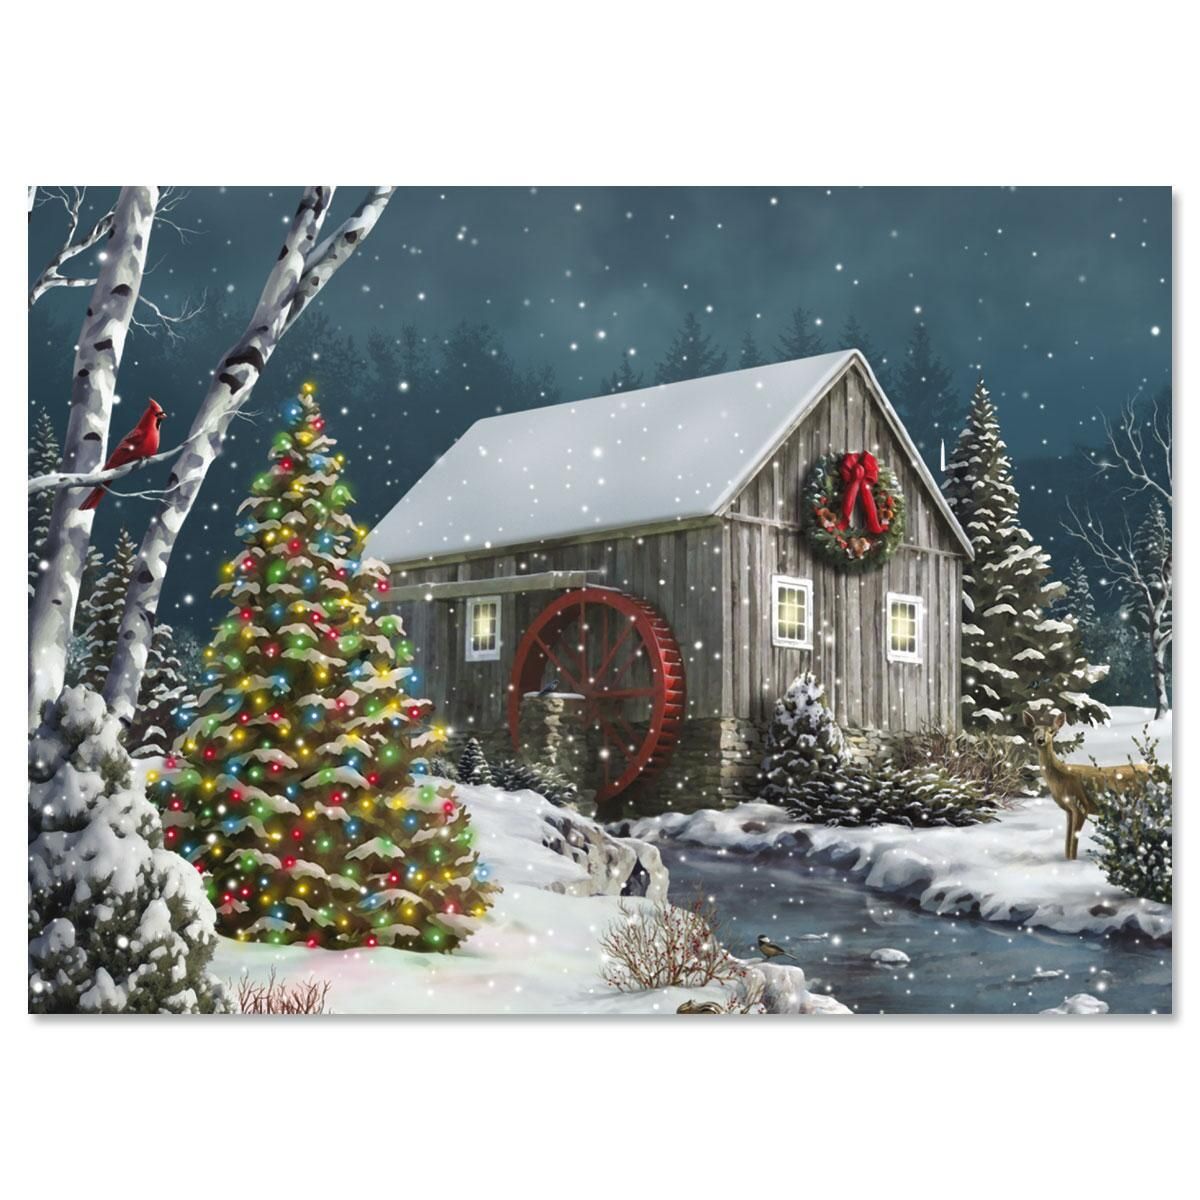 Falling Snow Christmas Cards image